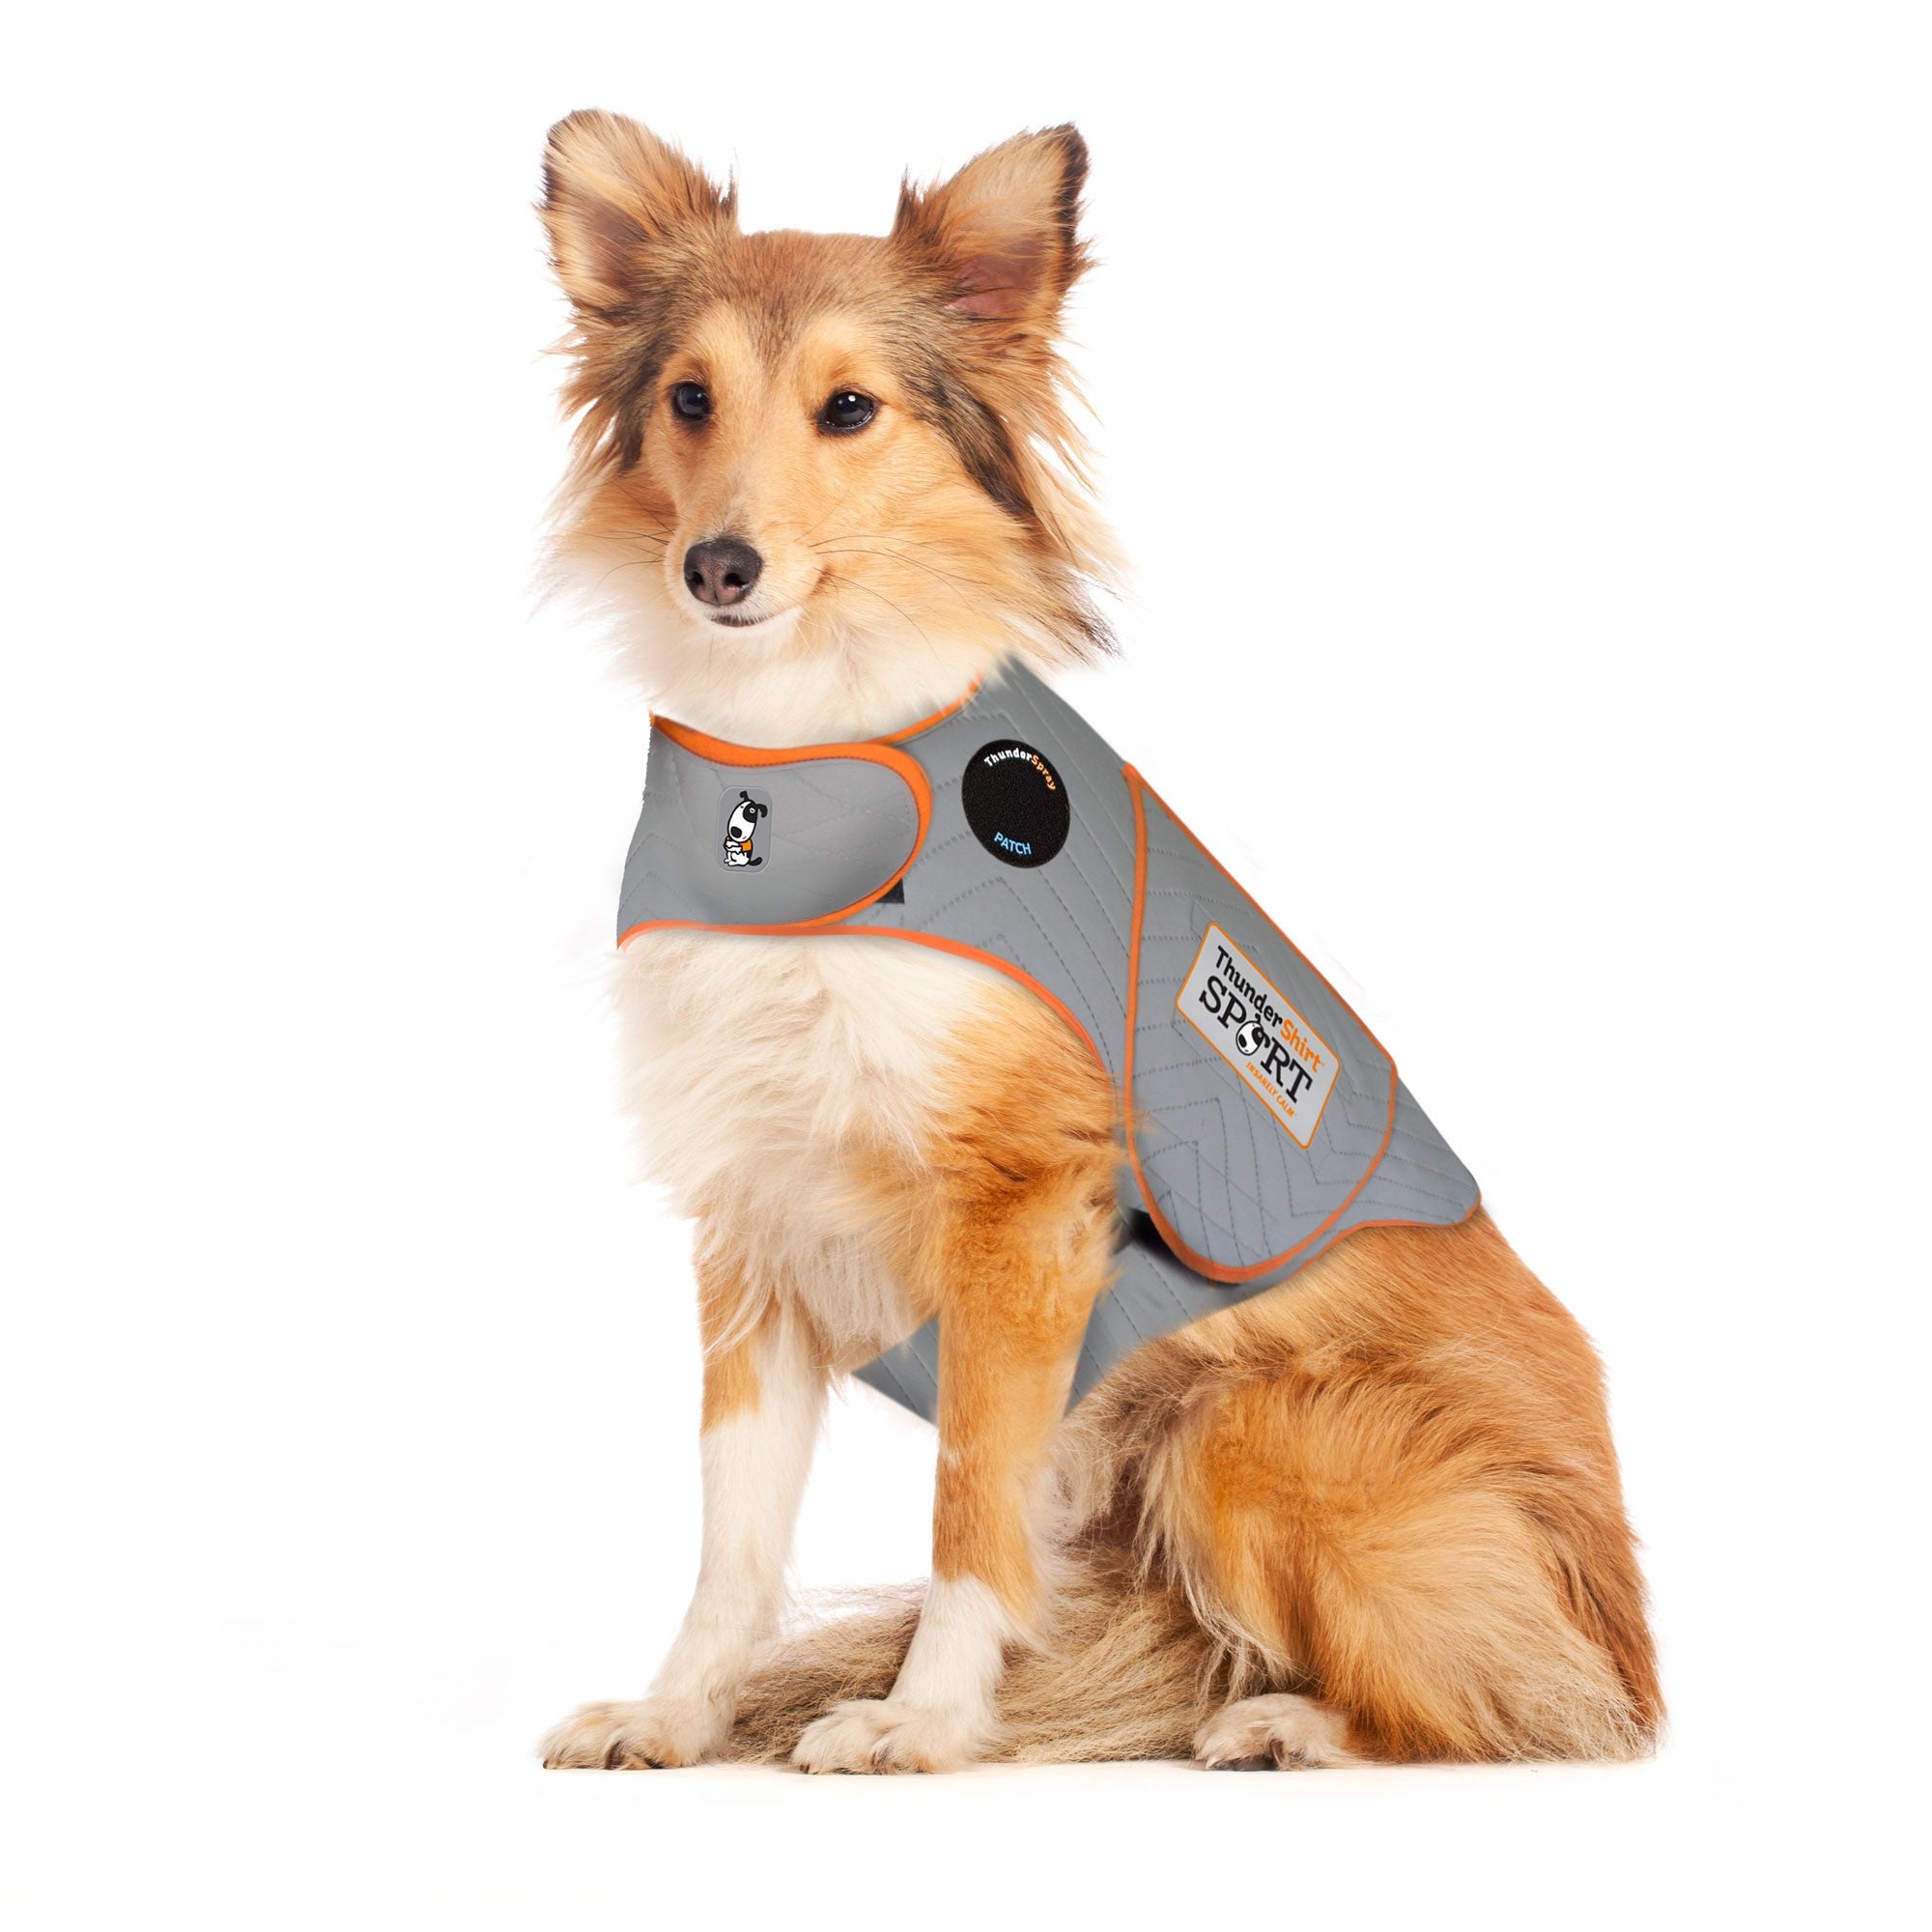 Thundershirt For Dogs - Calming Wrap